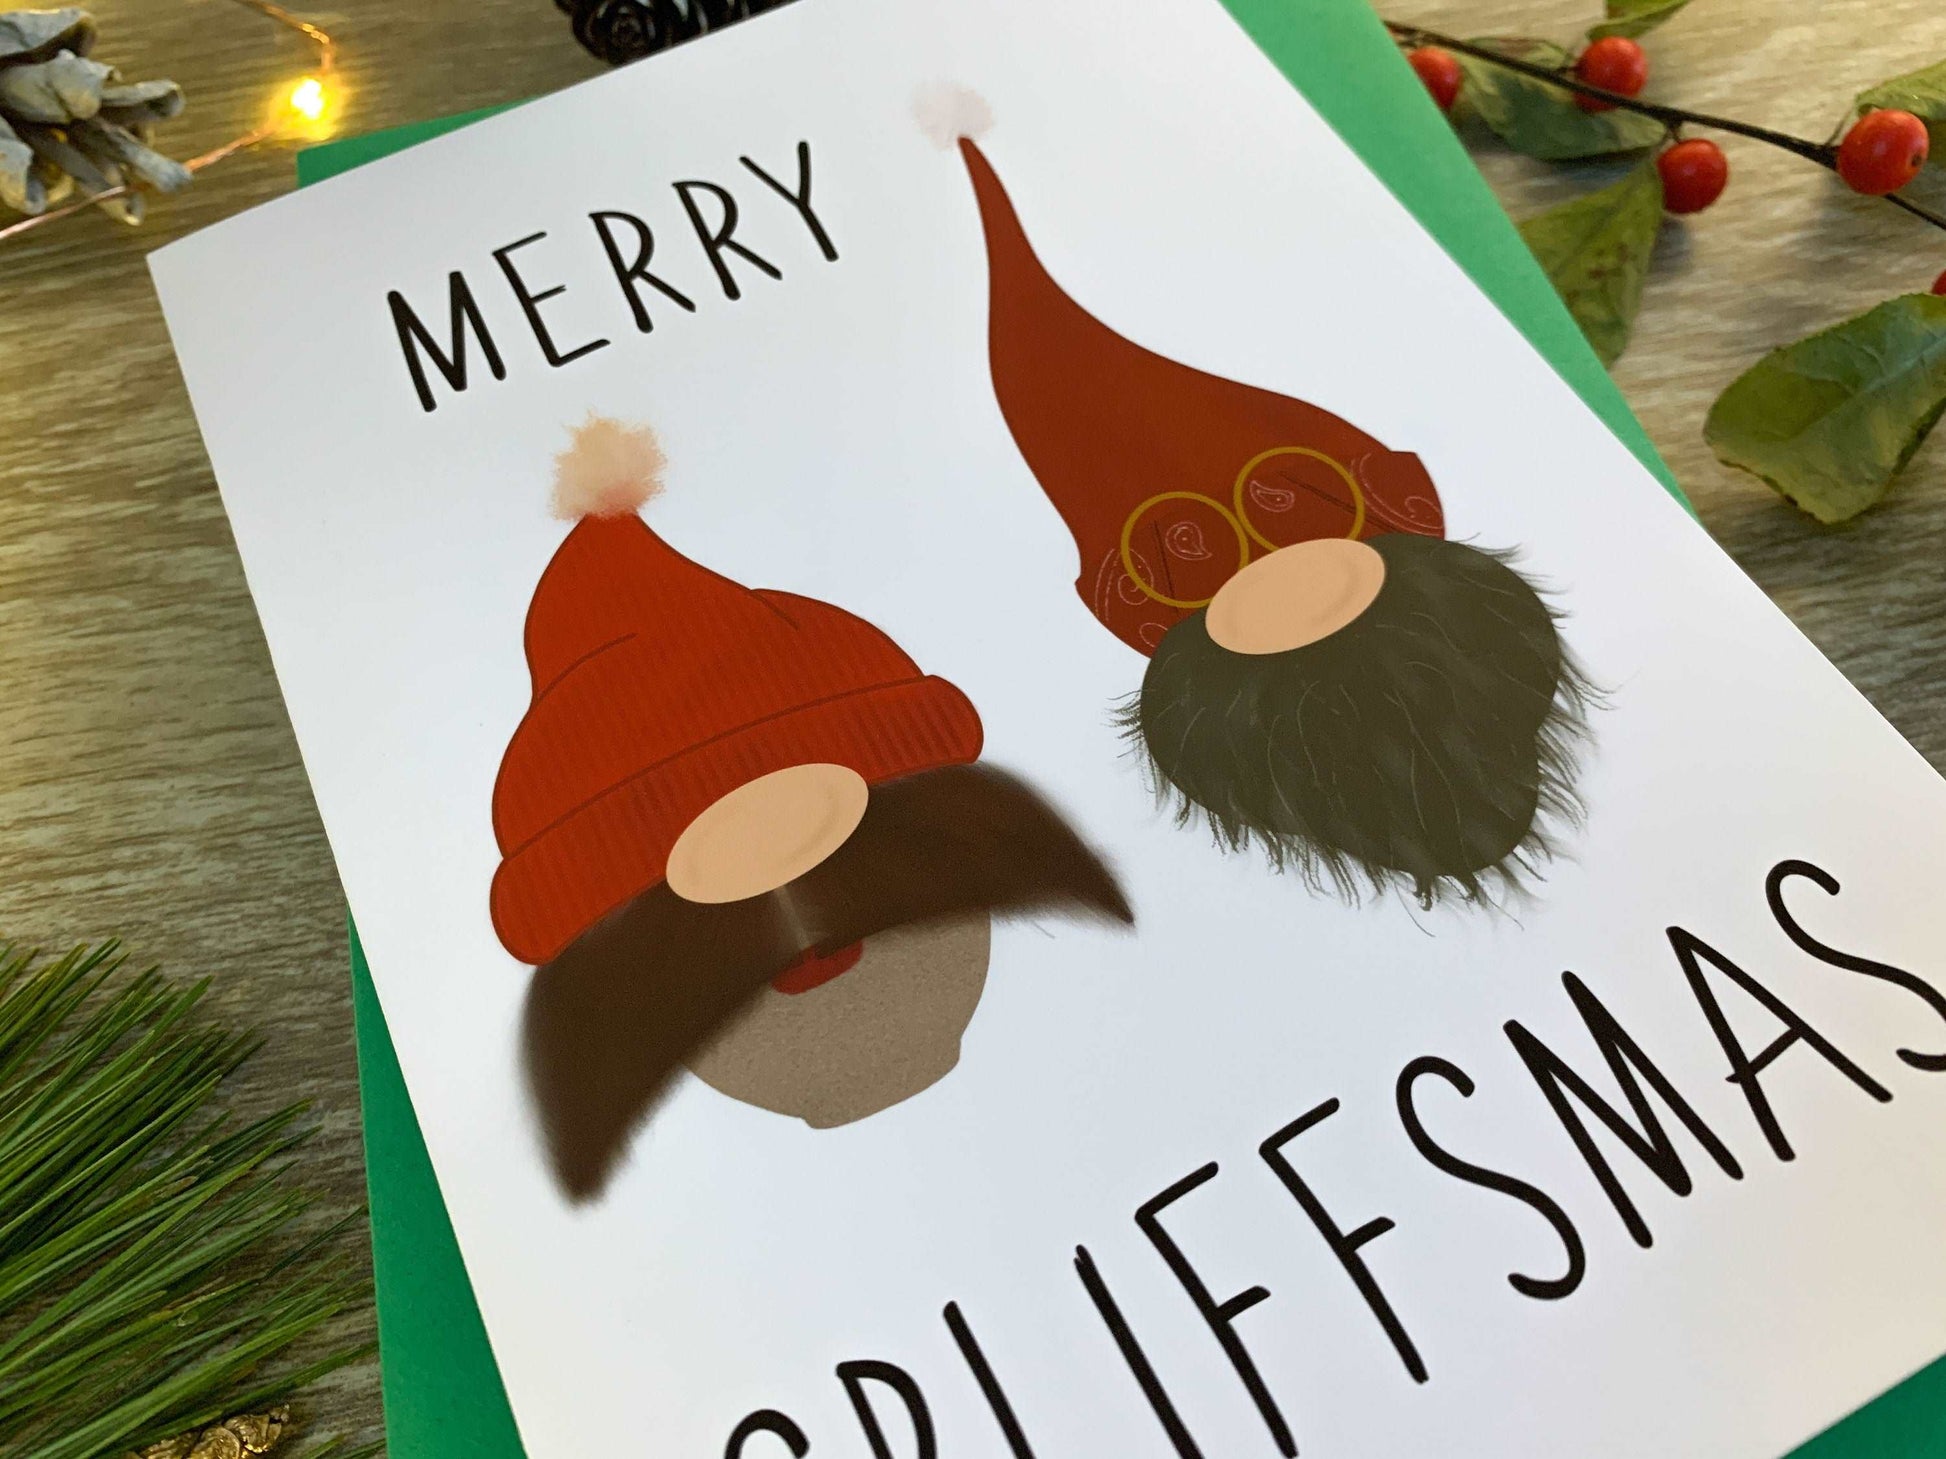 Funny Cannabis Cheech and Chong Holiday Card Merry Spliffsmas by StoneDonut Design